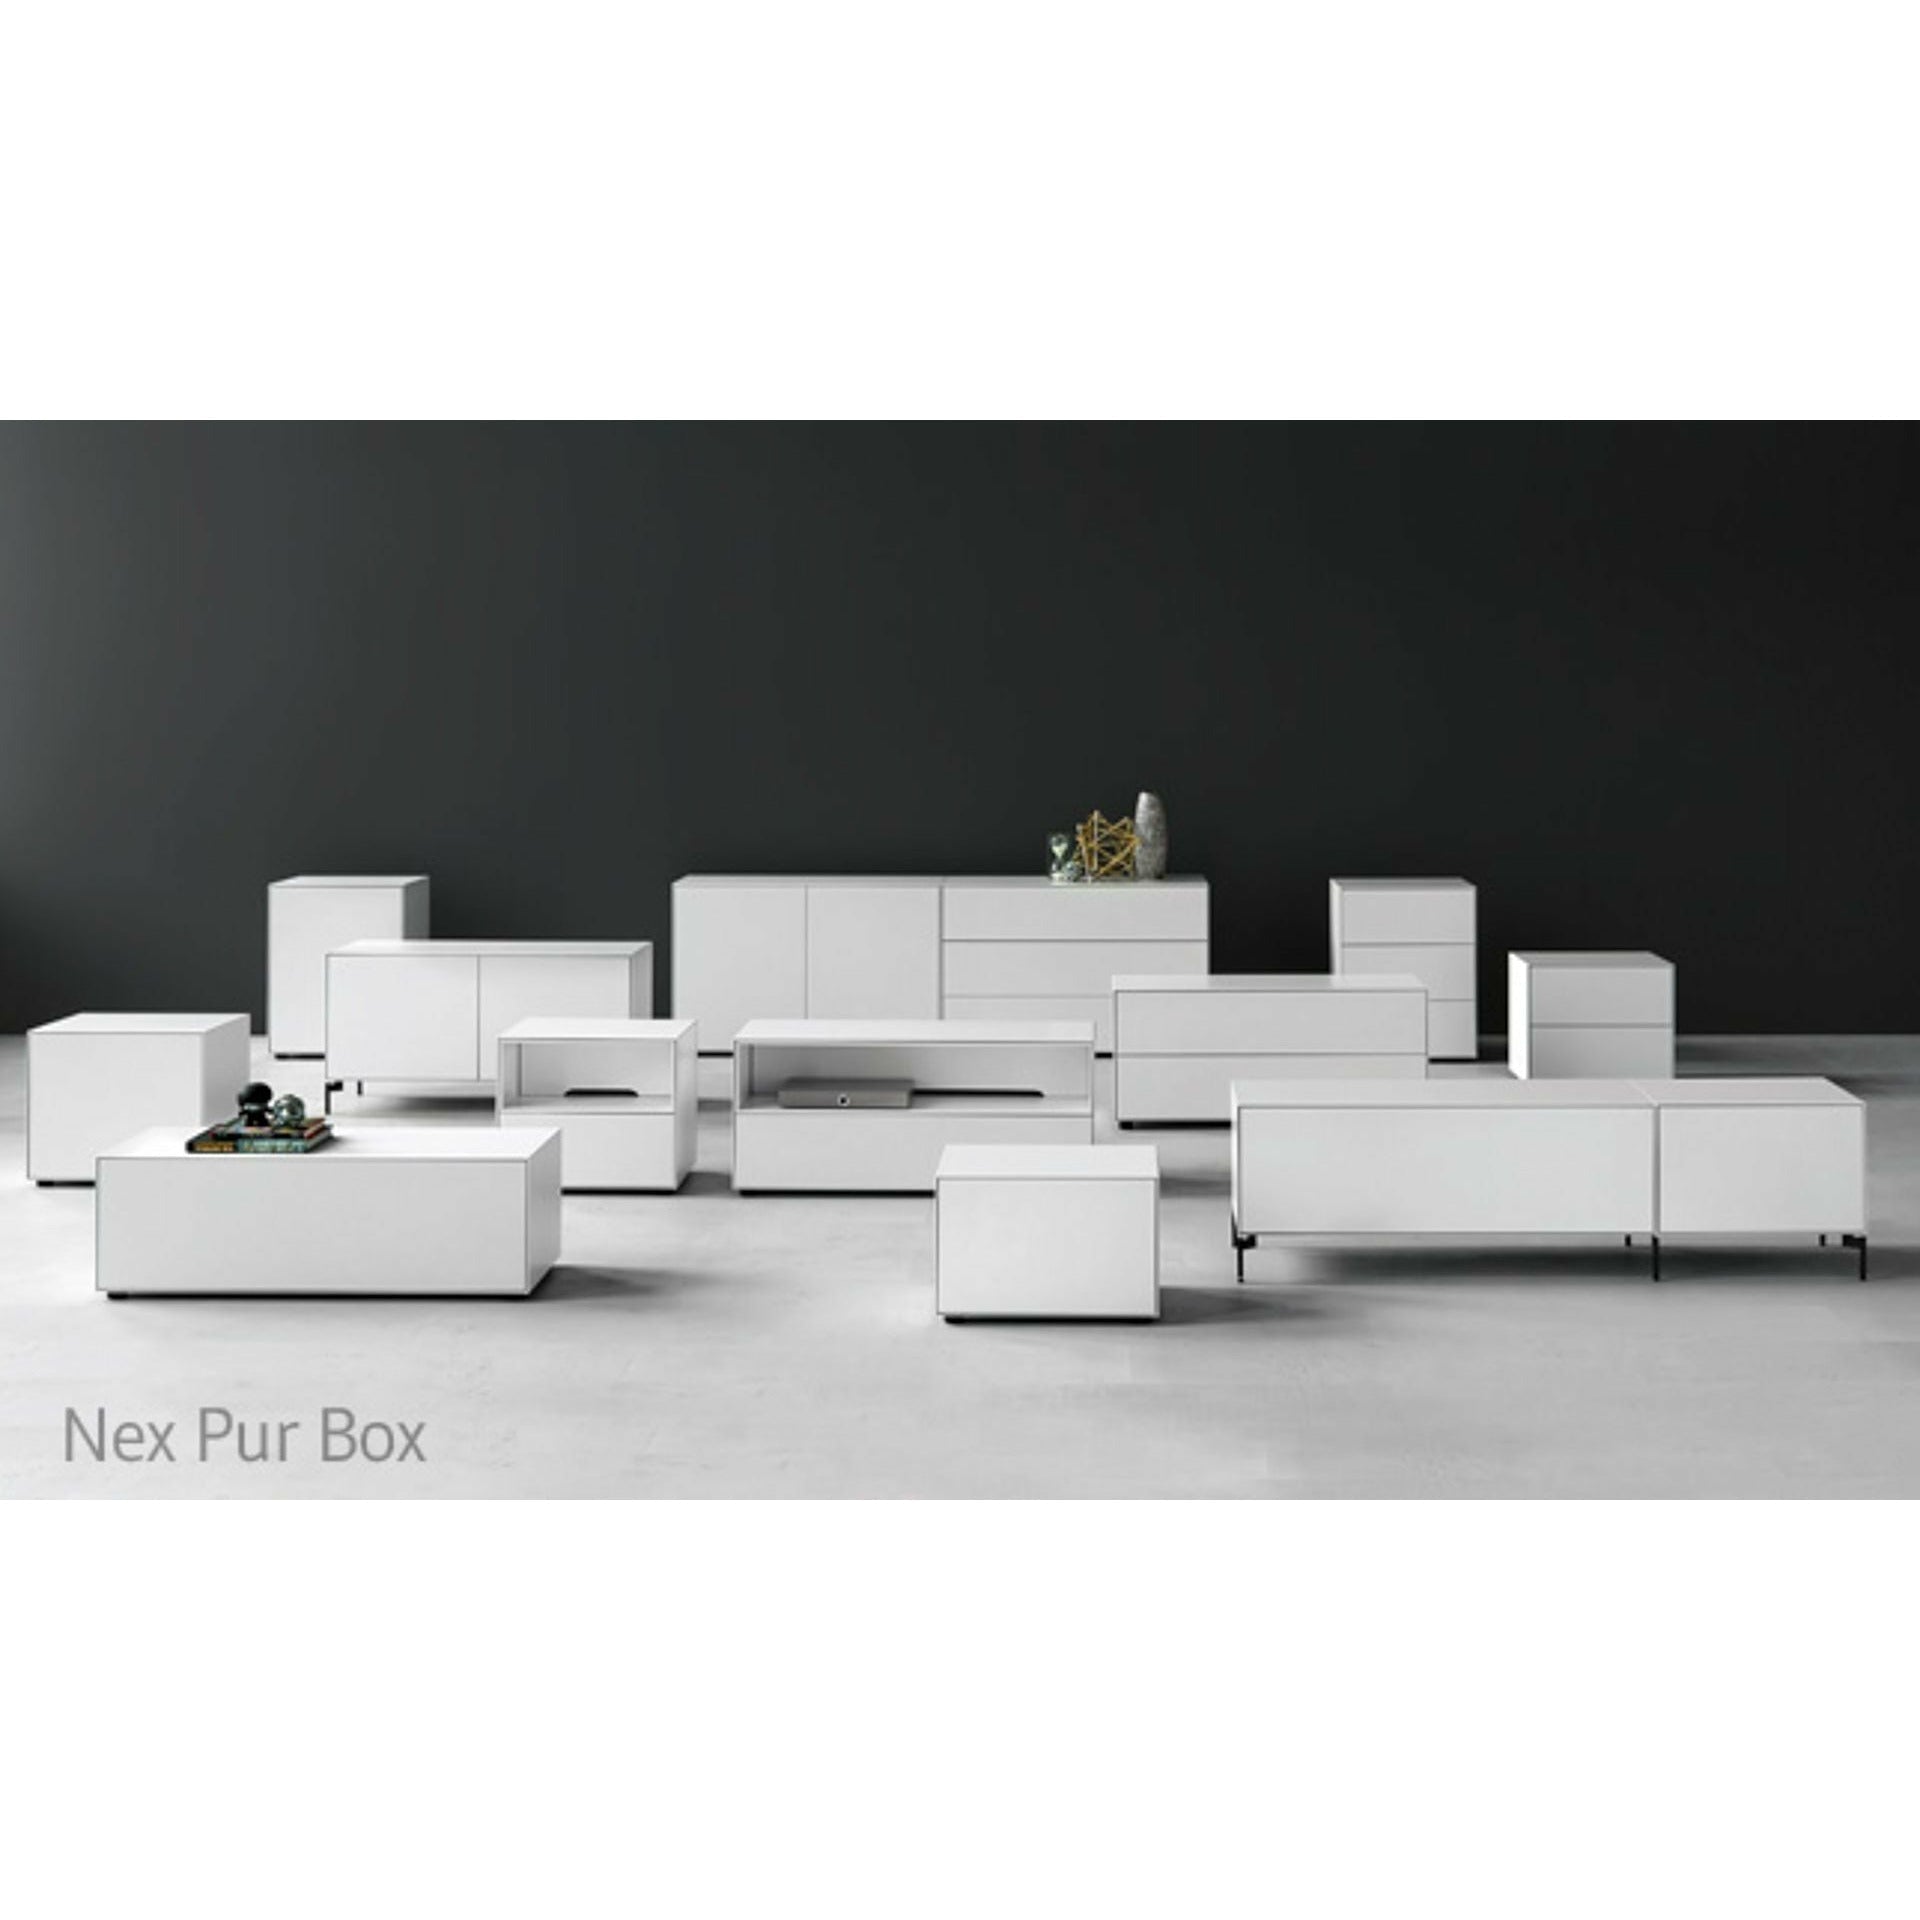 Piure Nex Pur Box Hx W 50x120 Cm, 2 Drawers